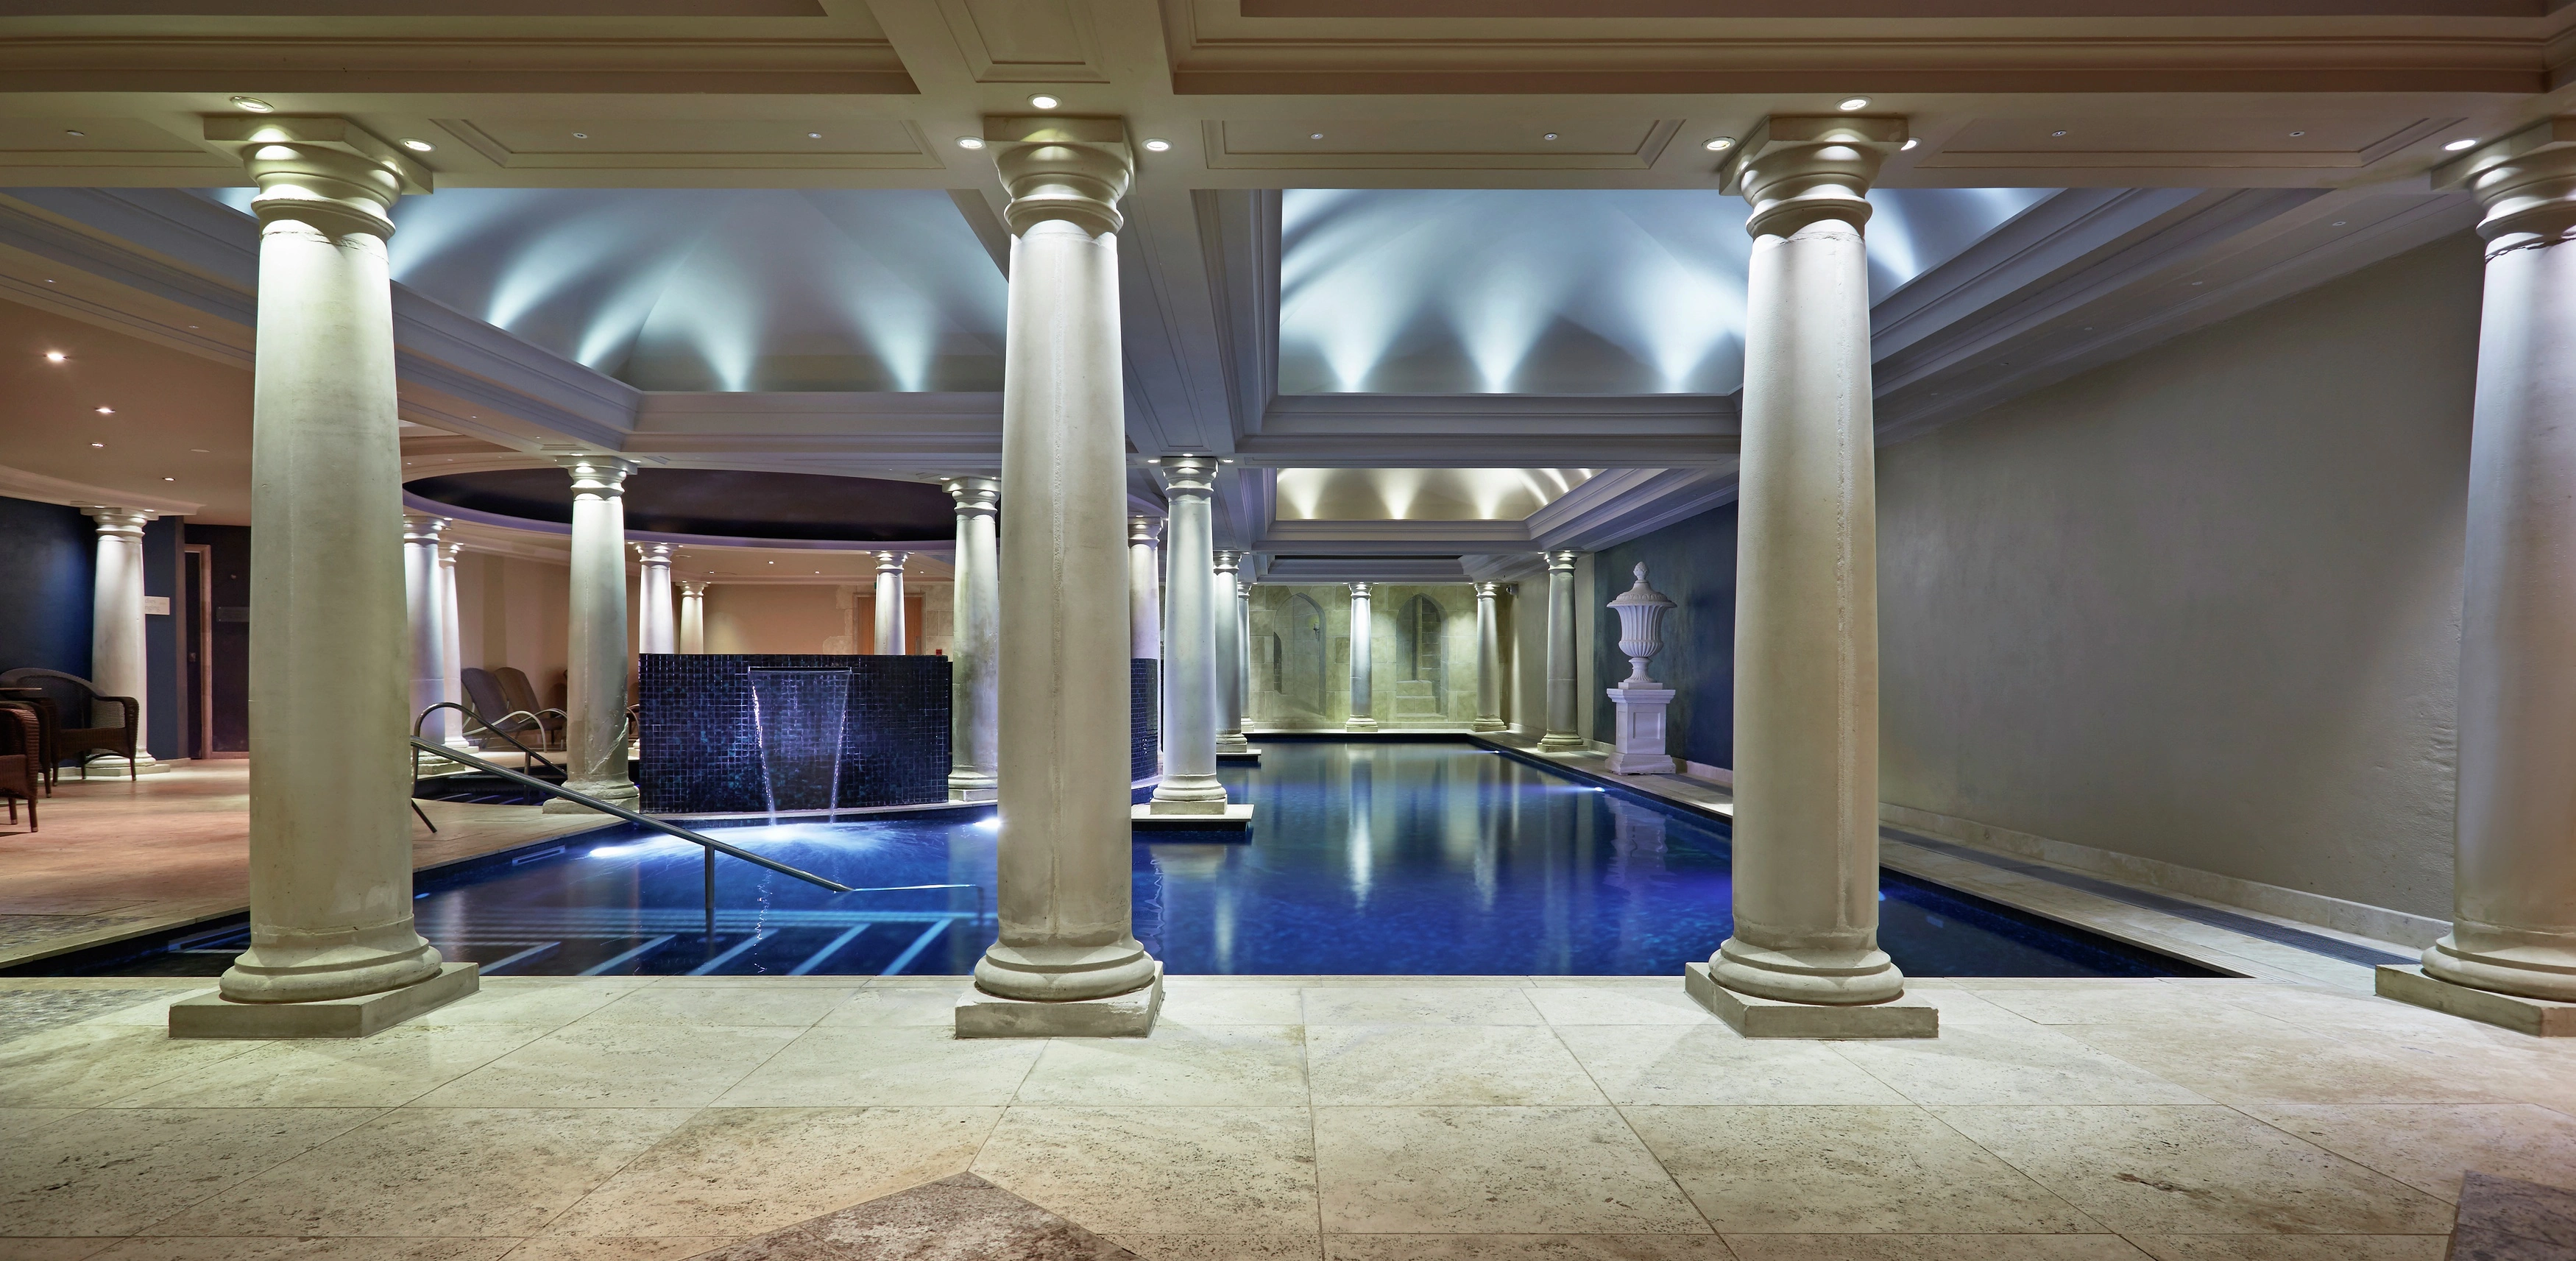 Chilstone handmade columns around an indoor swimming pool.